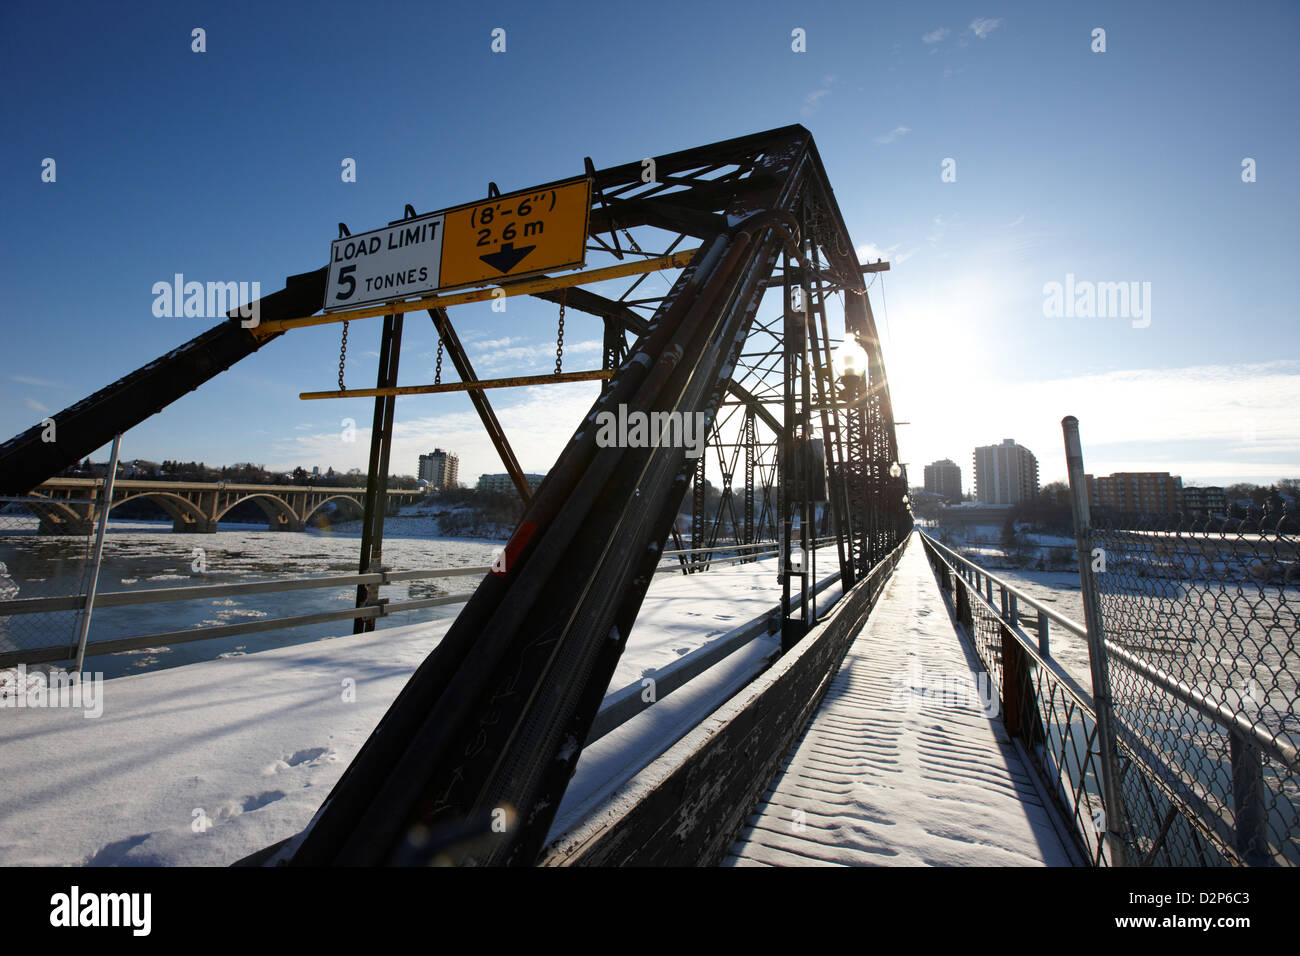 the old traffic bridge over the south saskatchewan river in winter flowing through downtown Saskatoon Saskatchewan Canada Stock Photo